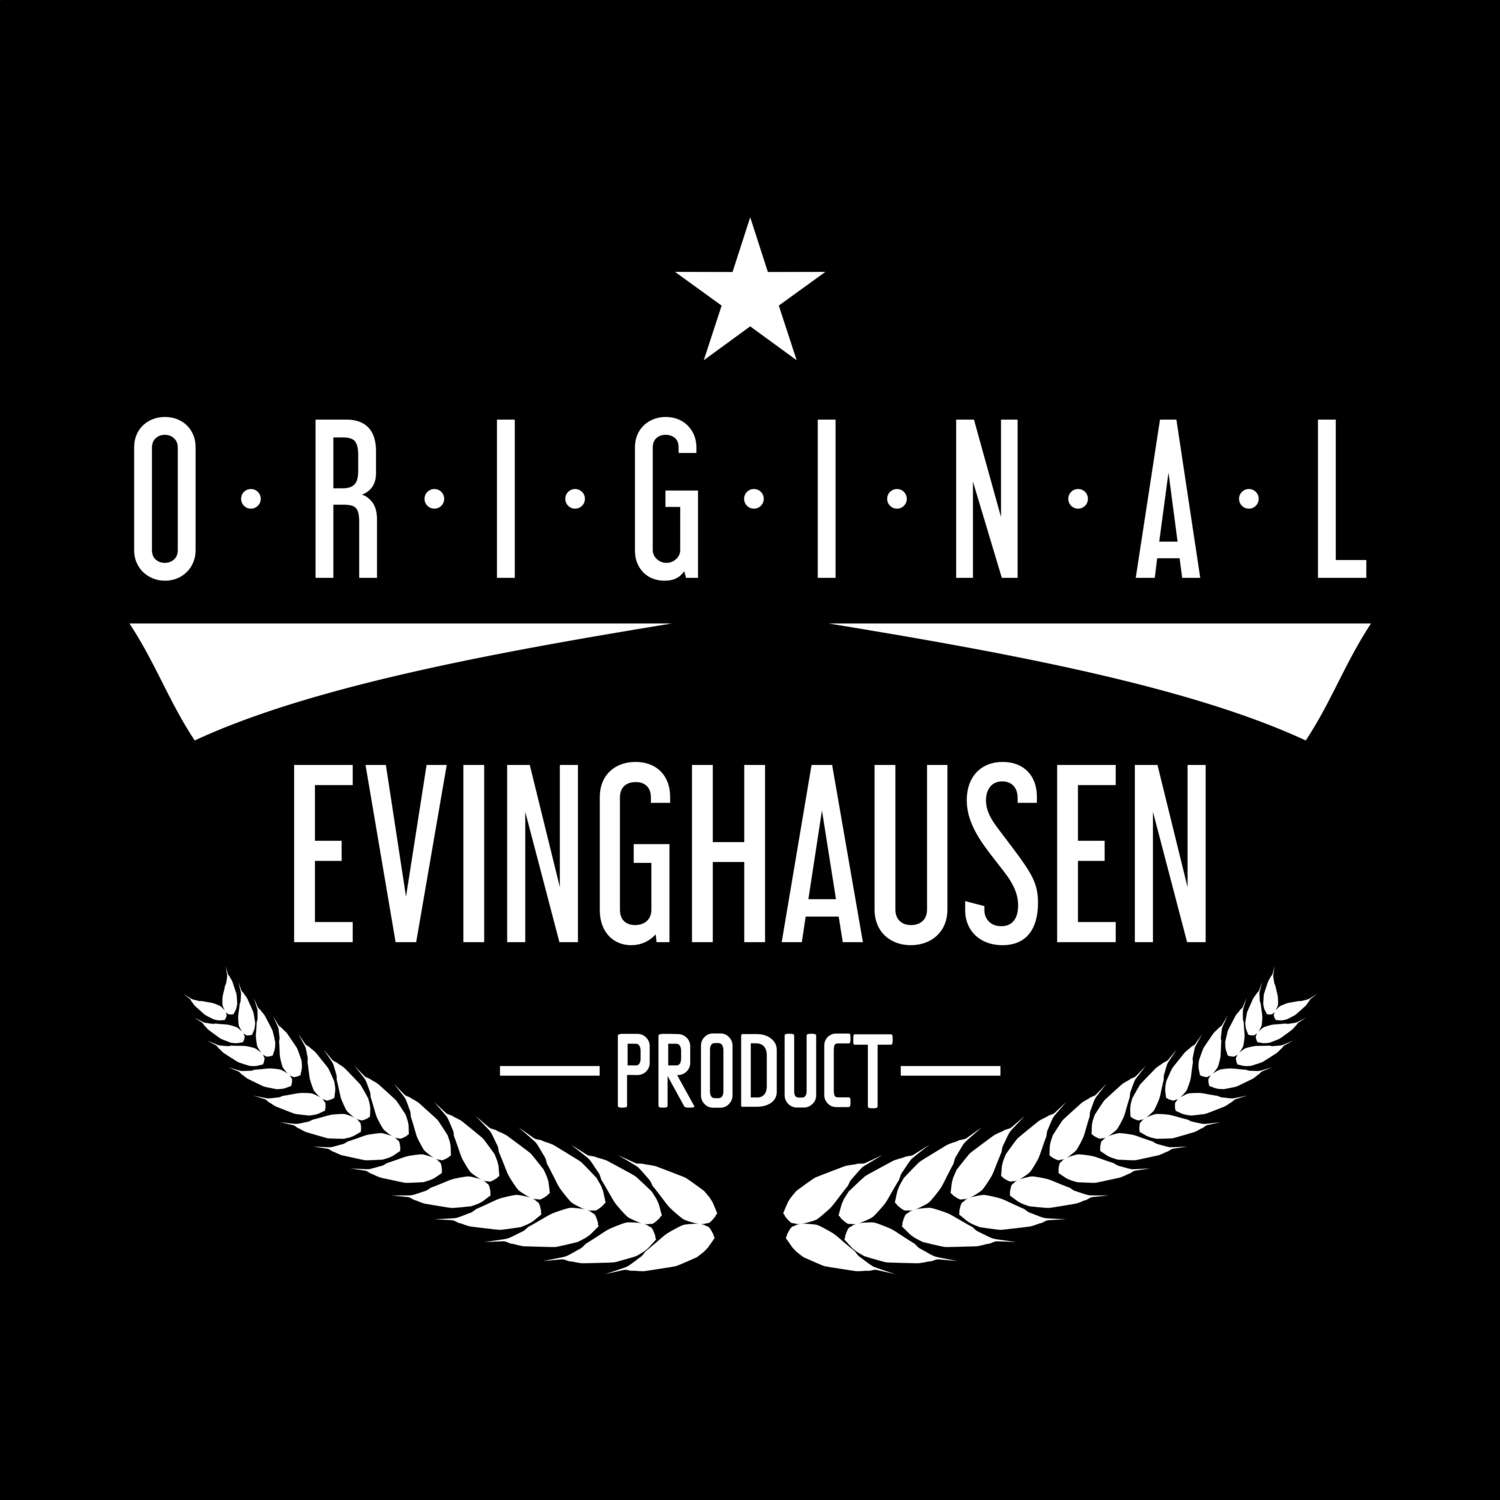 Evinghausen T-Shirt »Original Product«